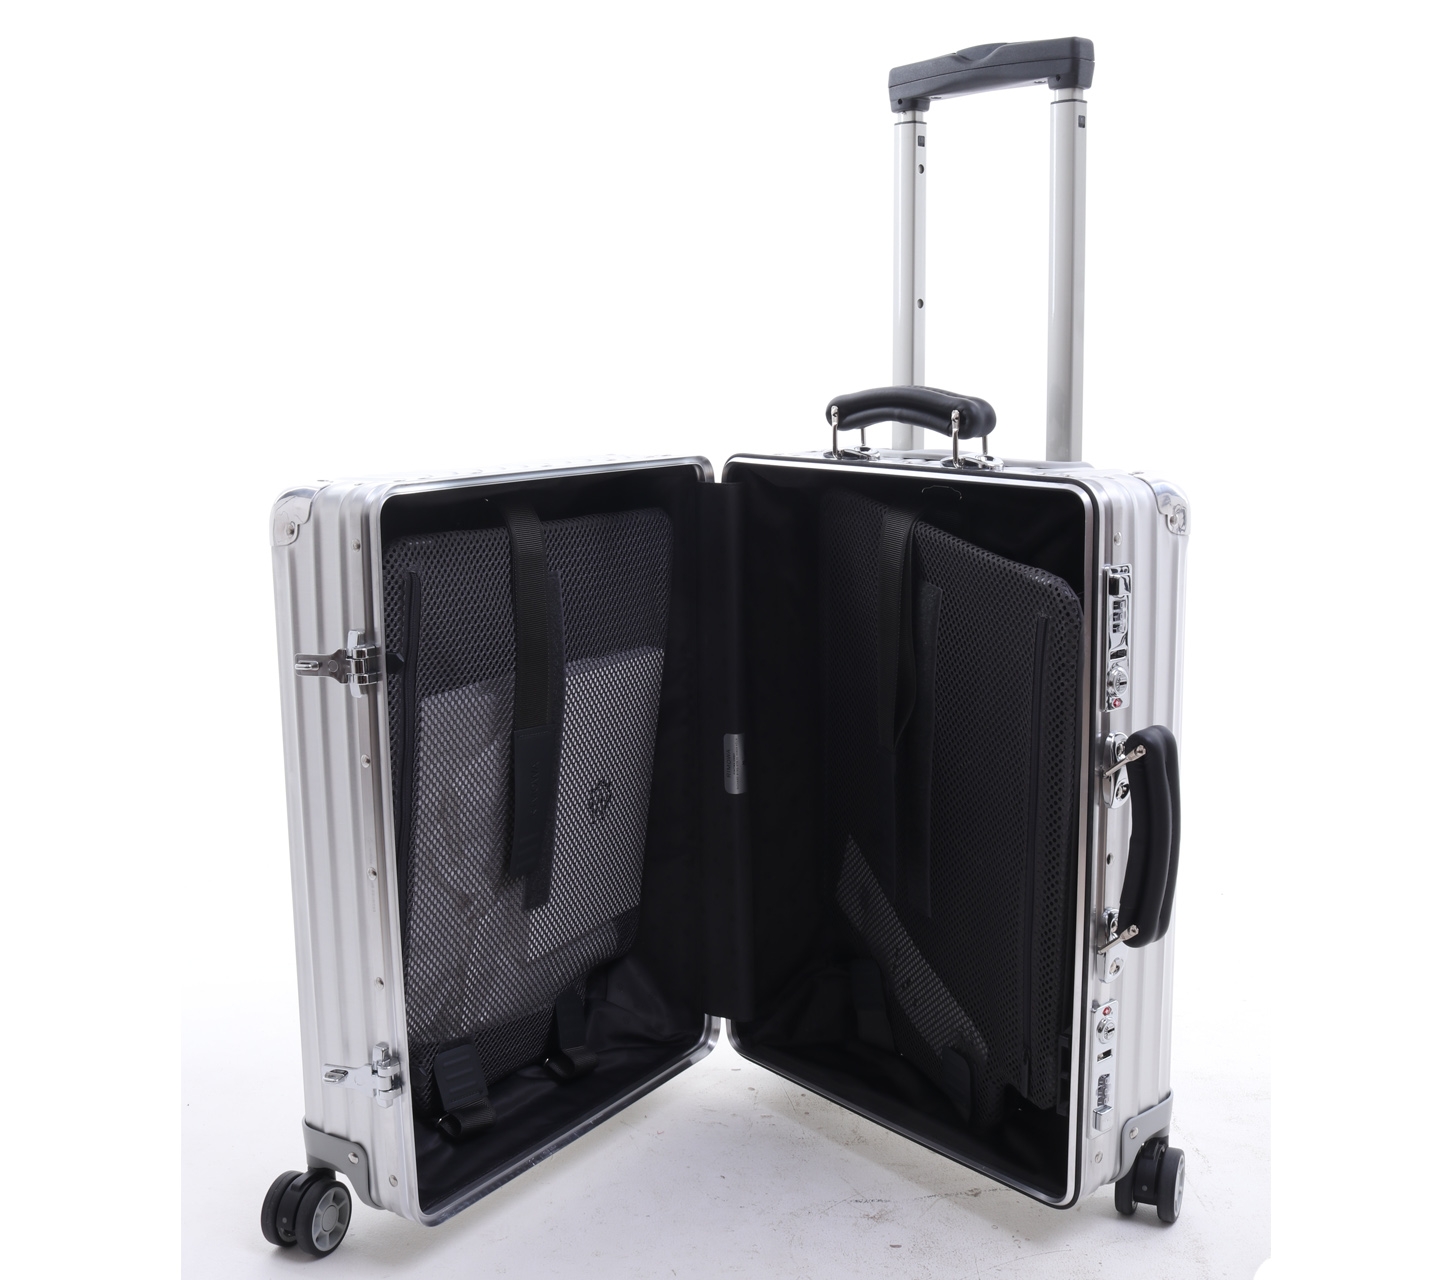 Rimowa Classic Cabin Luggage And Travel